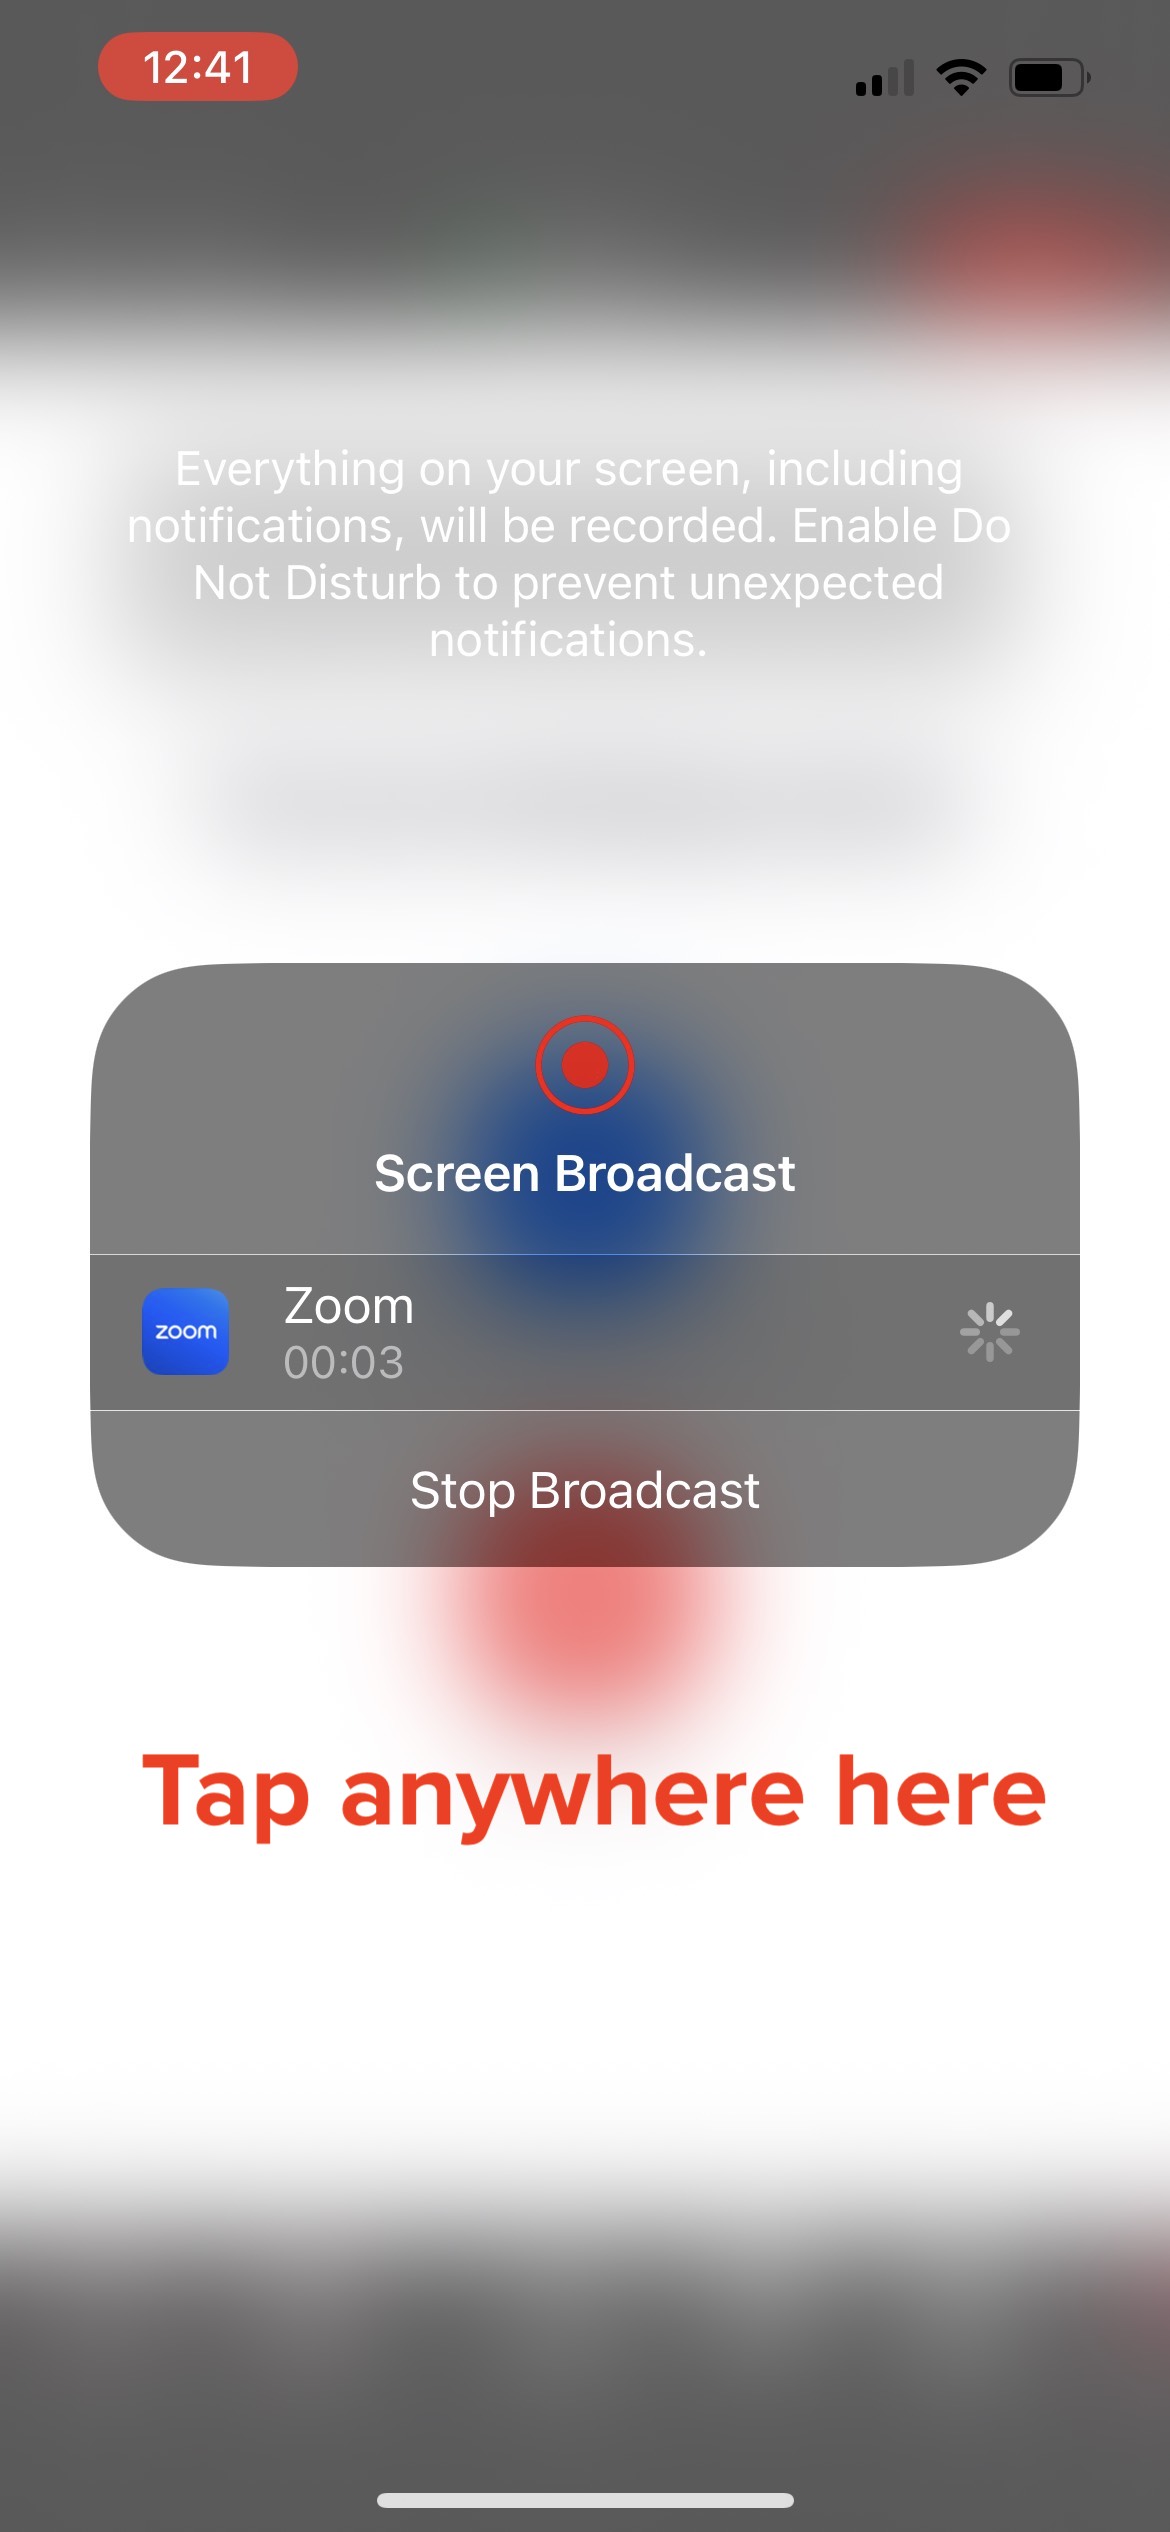 Zoom_iOS_Screen broadcast started.jpeg